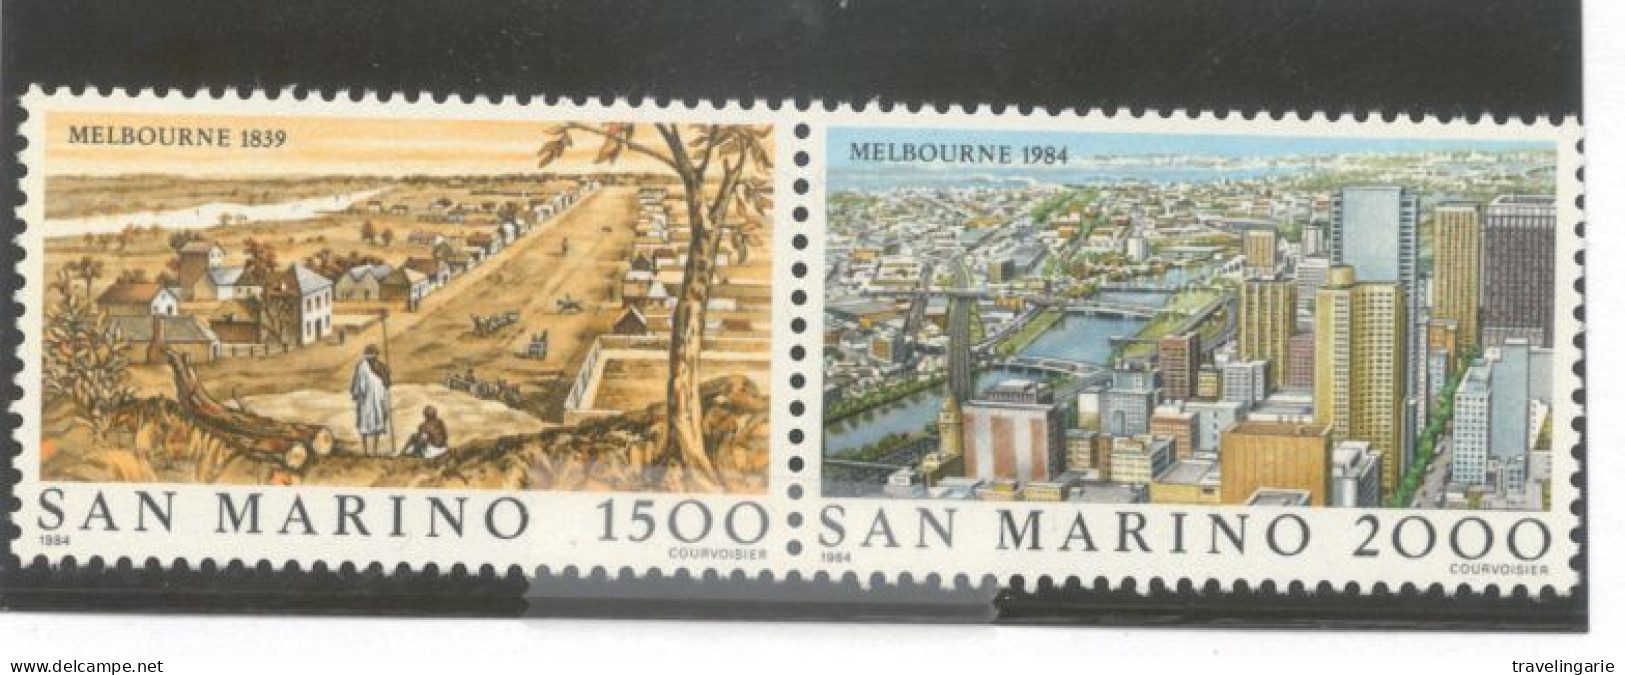 San Marino 1984 Famous Cities Melbourne MNH ** Se-tenant Pair - Neufs